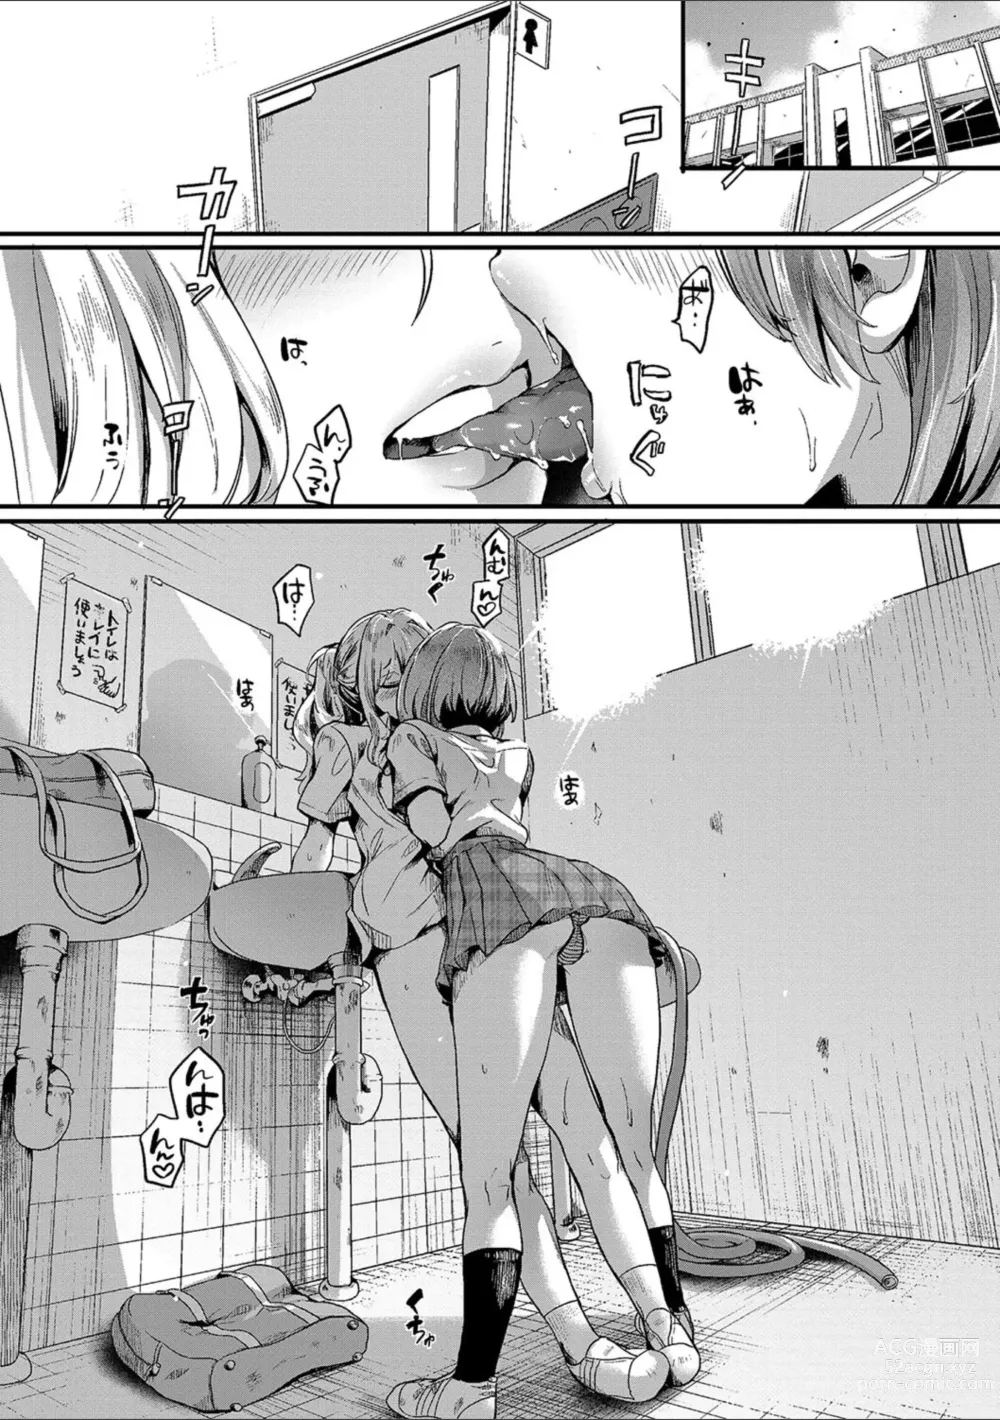 Page 11 of manga Watashi wa Onnanoko ga Suki datta Hazu nano ni - But I fell in with something different.